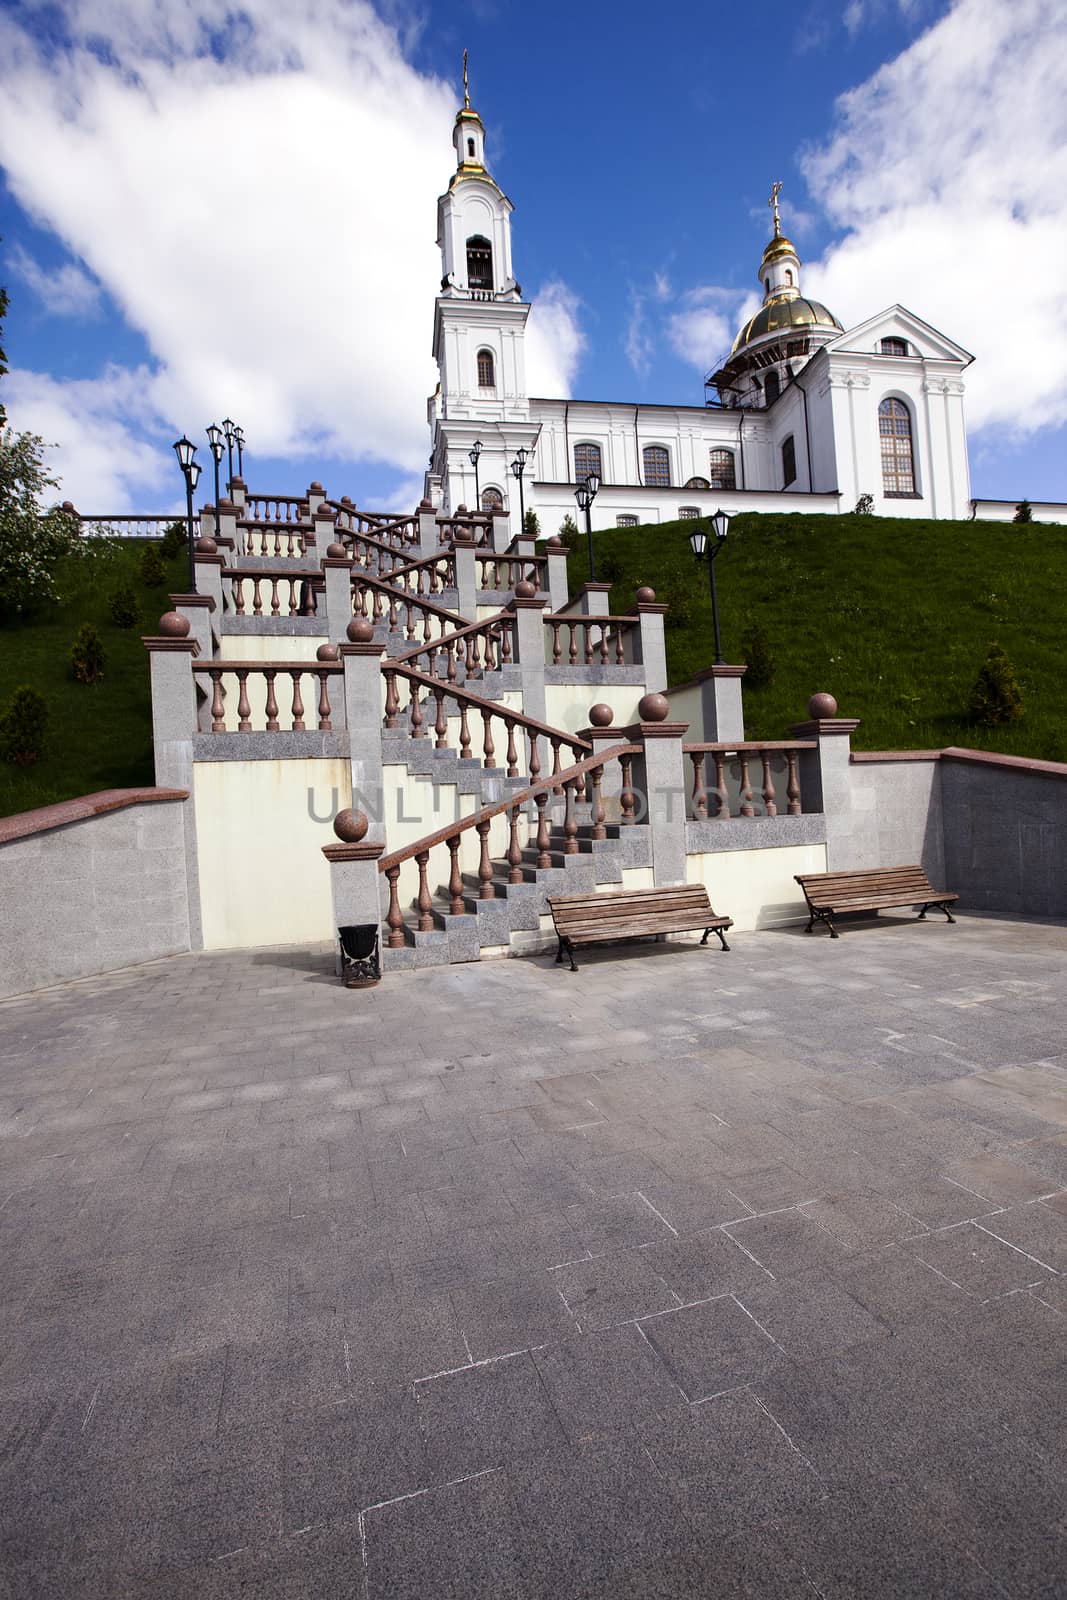  Orthodox Church, located in the city of Vitebsk, Belarus